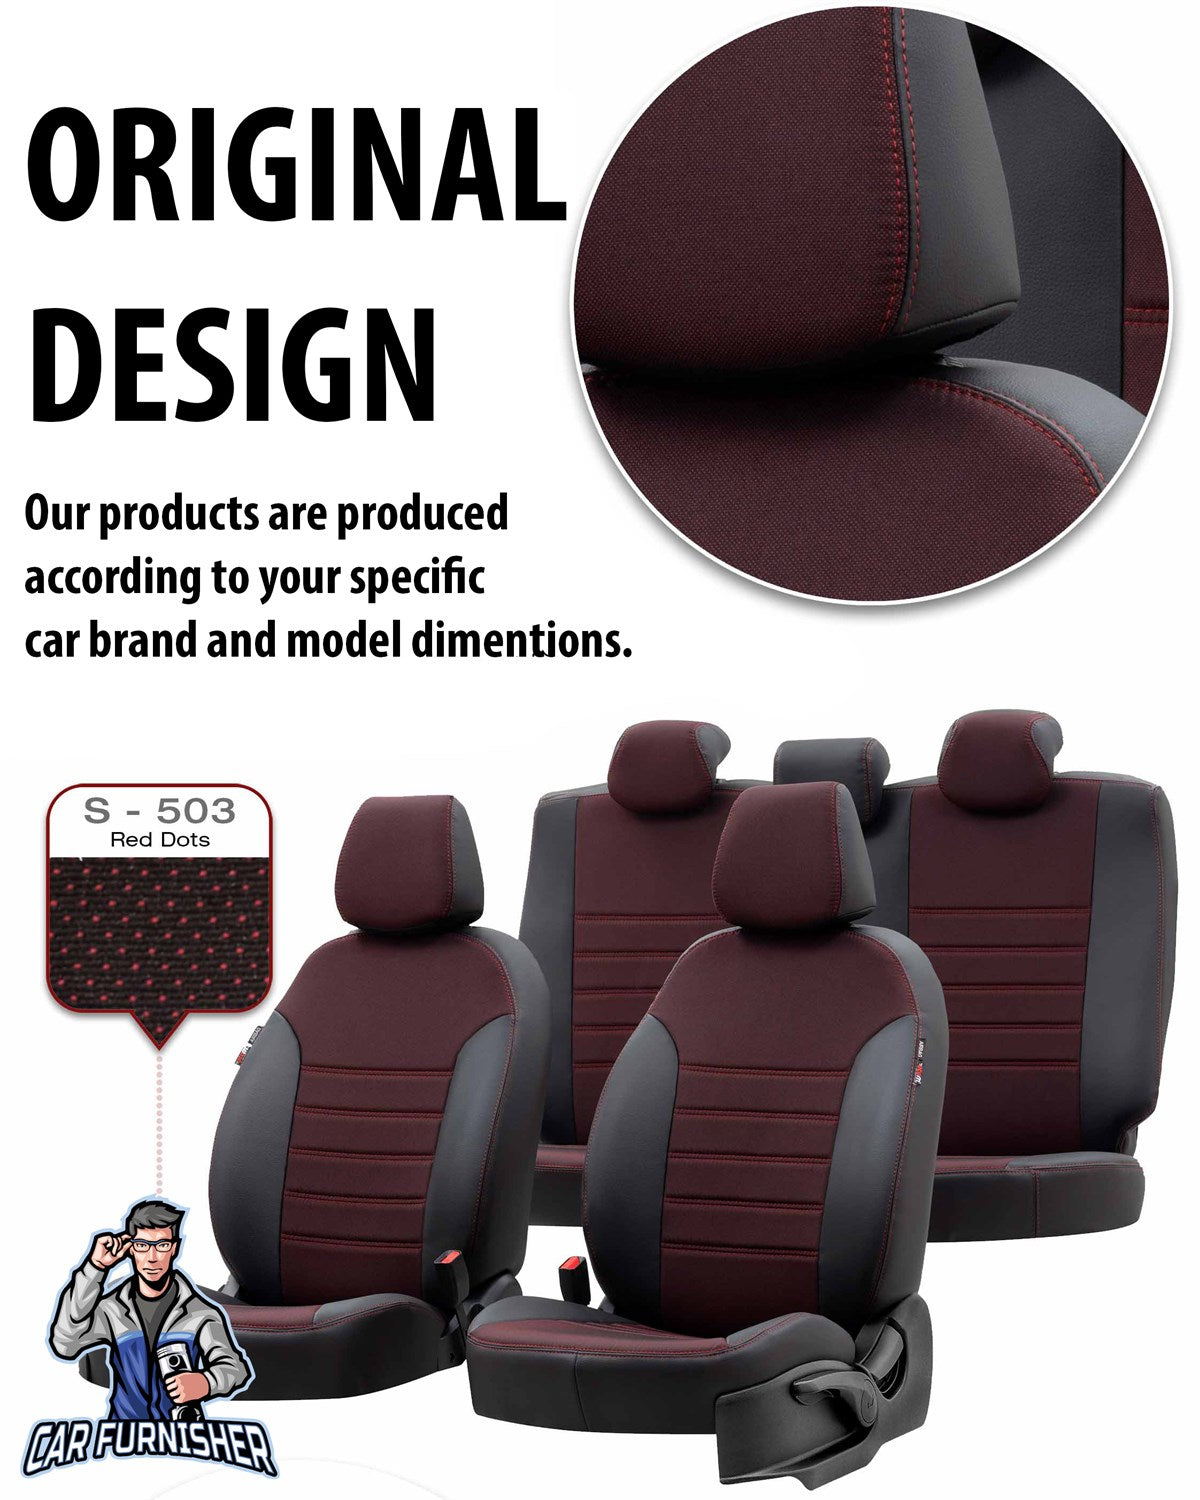 Fiat Scudo Seat Covers Paris Leather & Jacquard Design Blue Leather & Jacquard Fabric